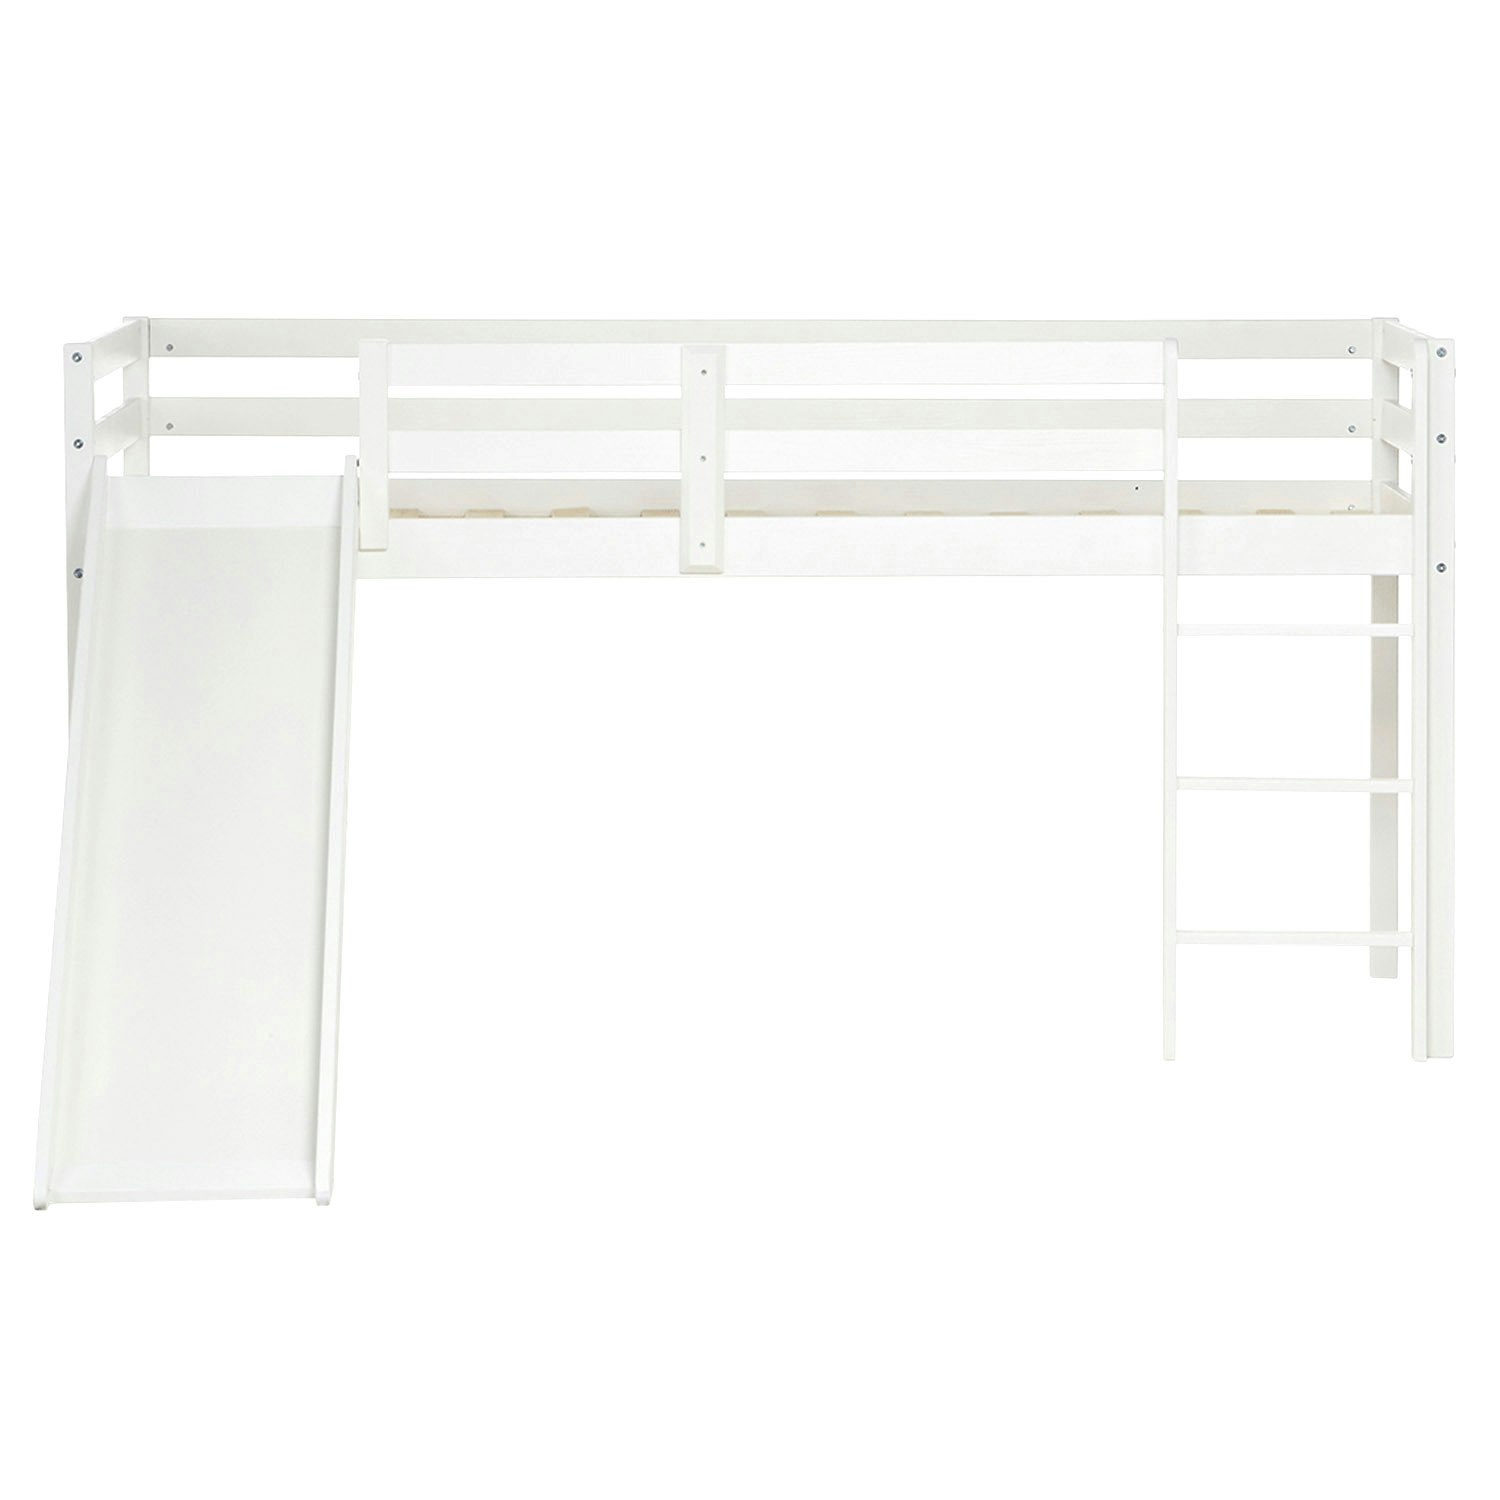 White loft bed with slide for the children's room, 90x200 cm White loft bed with slide for the children's room, 90x200 cm